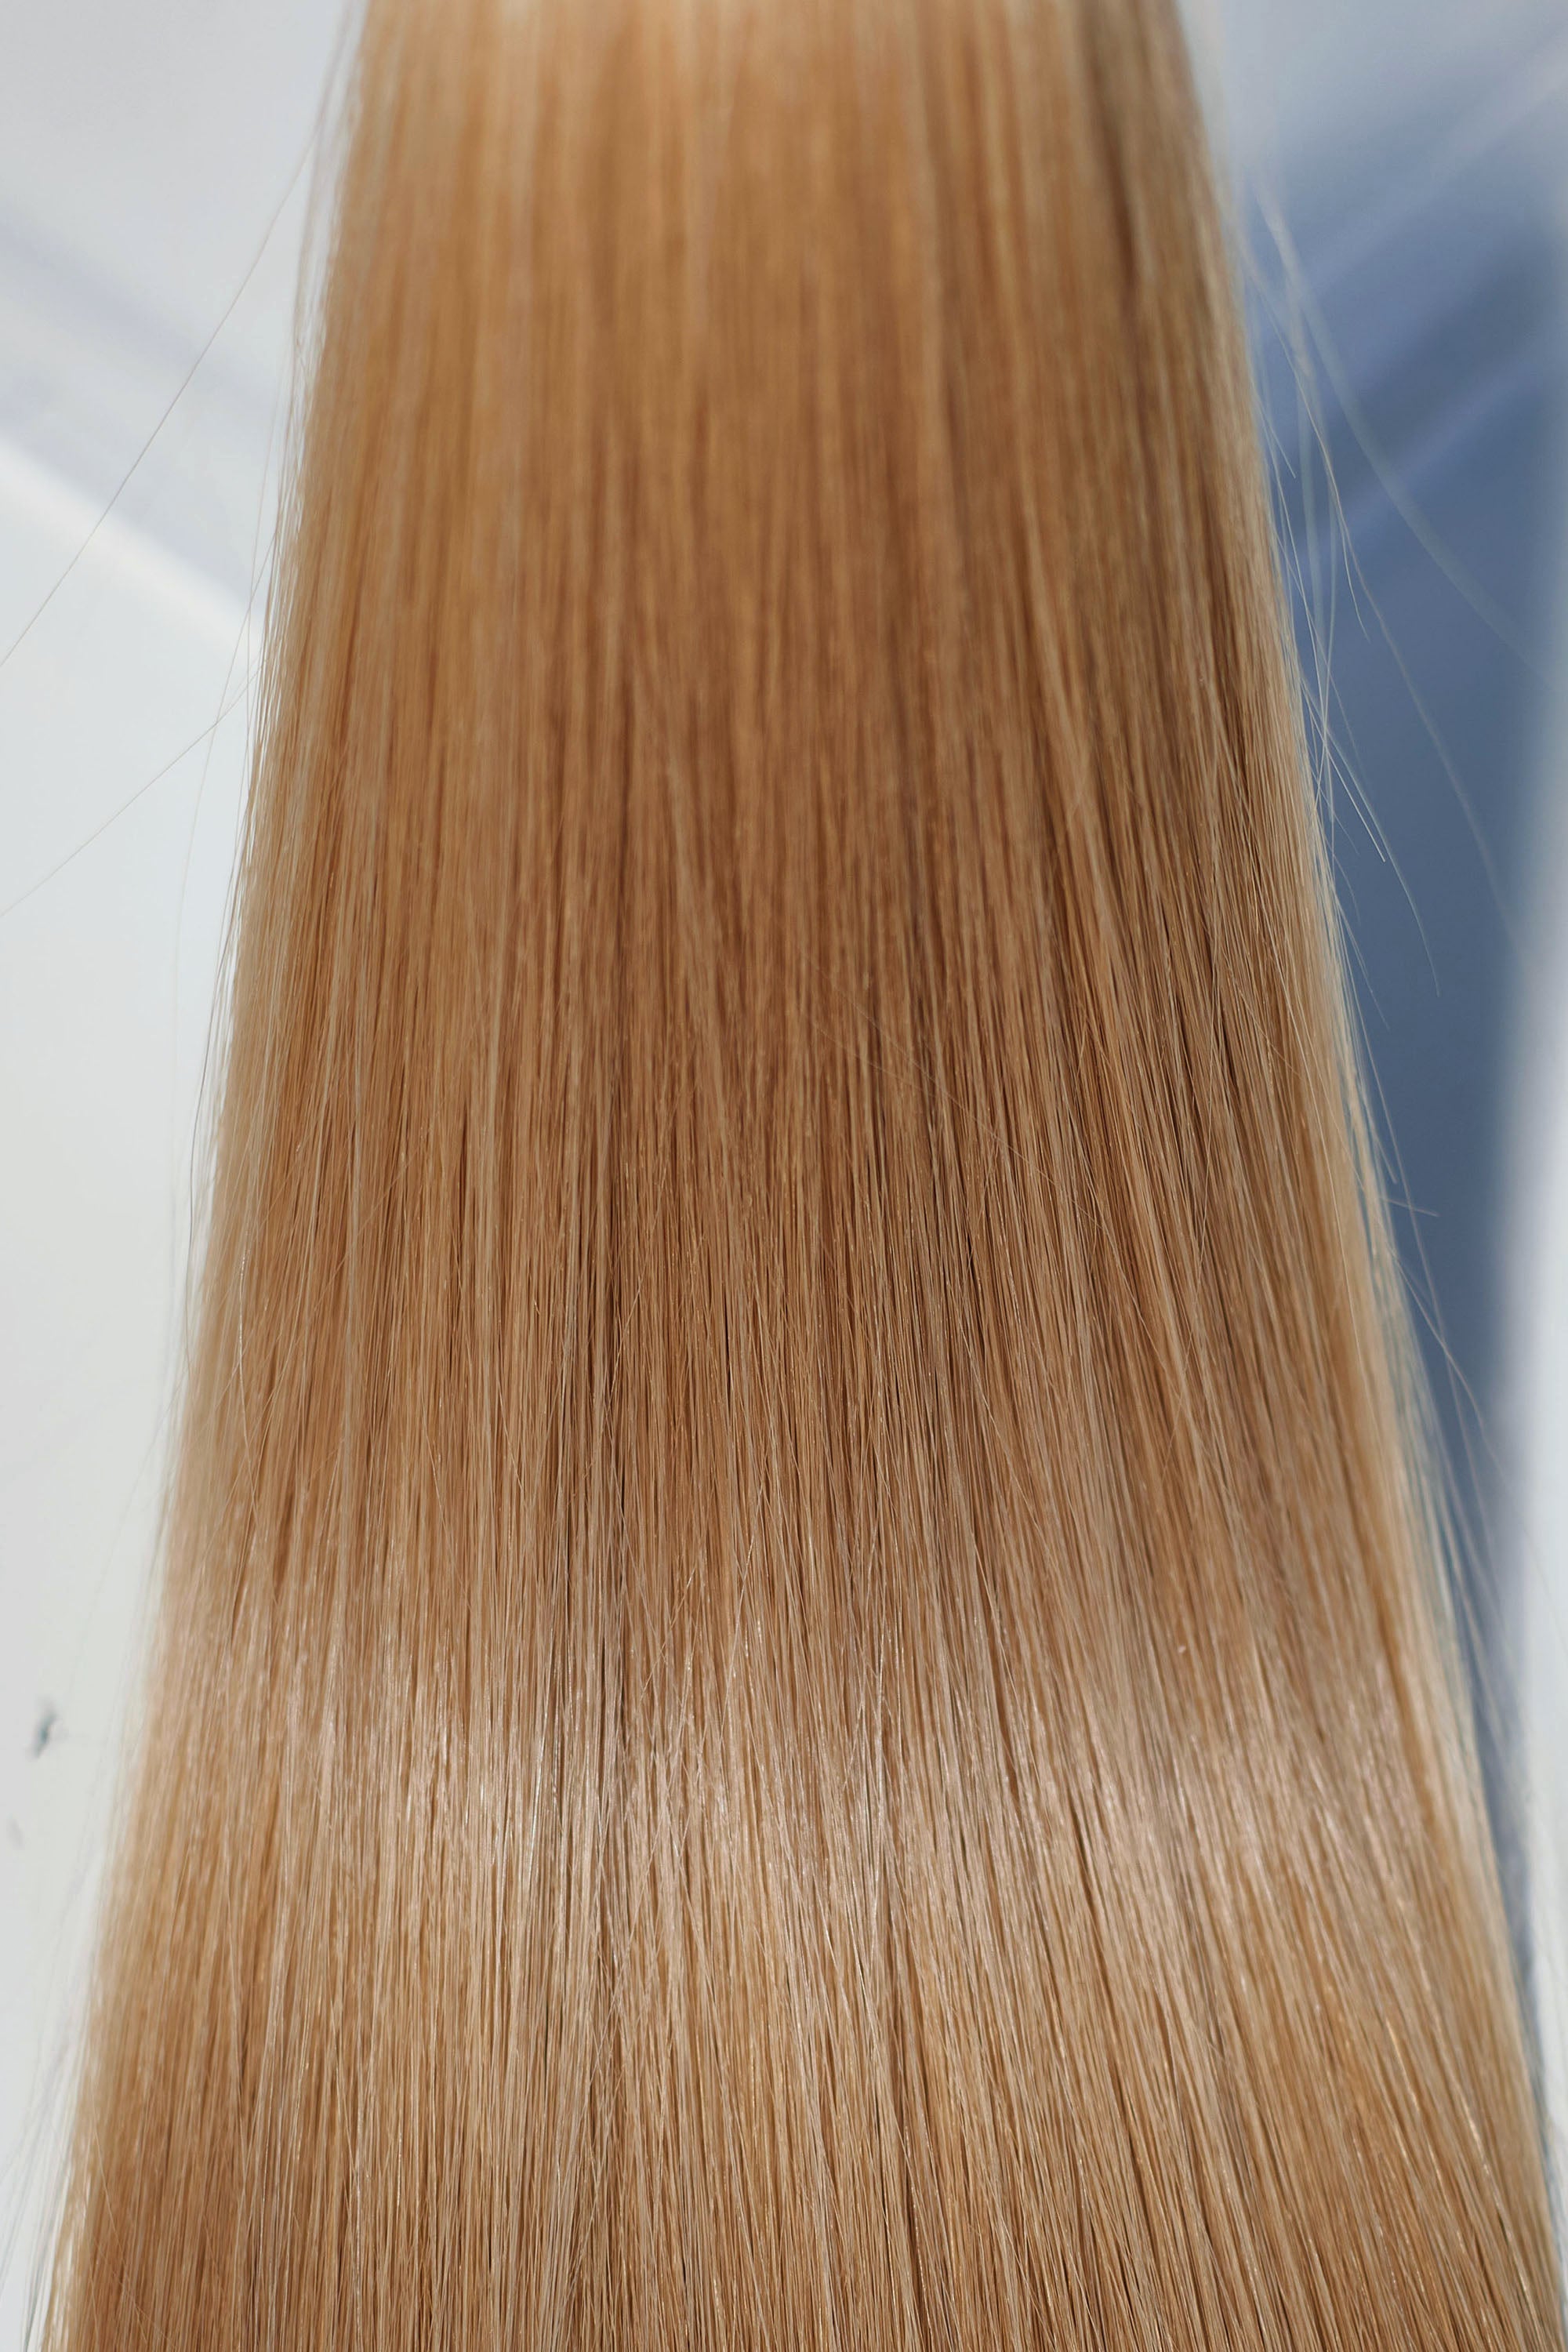 Behair professional Keratin Tip "Premium" 22" (55cm) Natural Straight Gold Sand #18 - 25g (1g each pcs) hair extensions